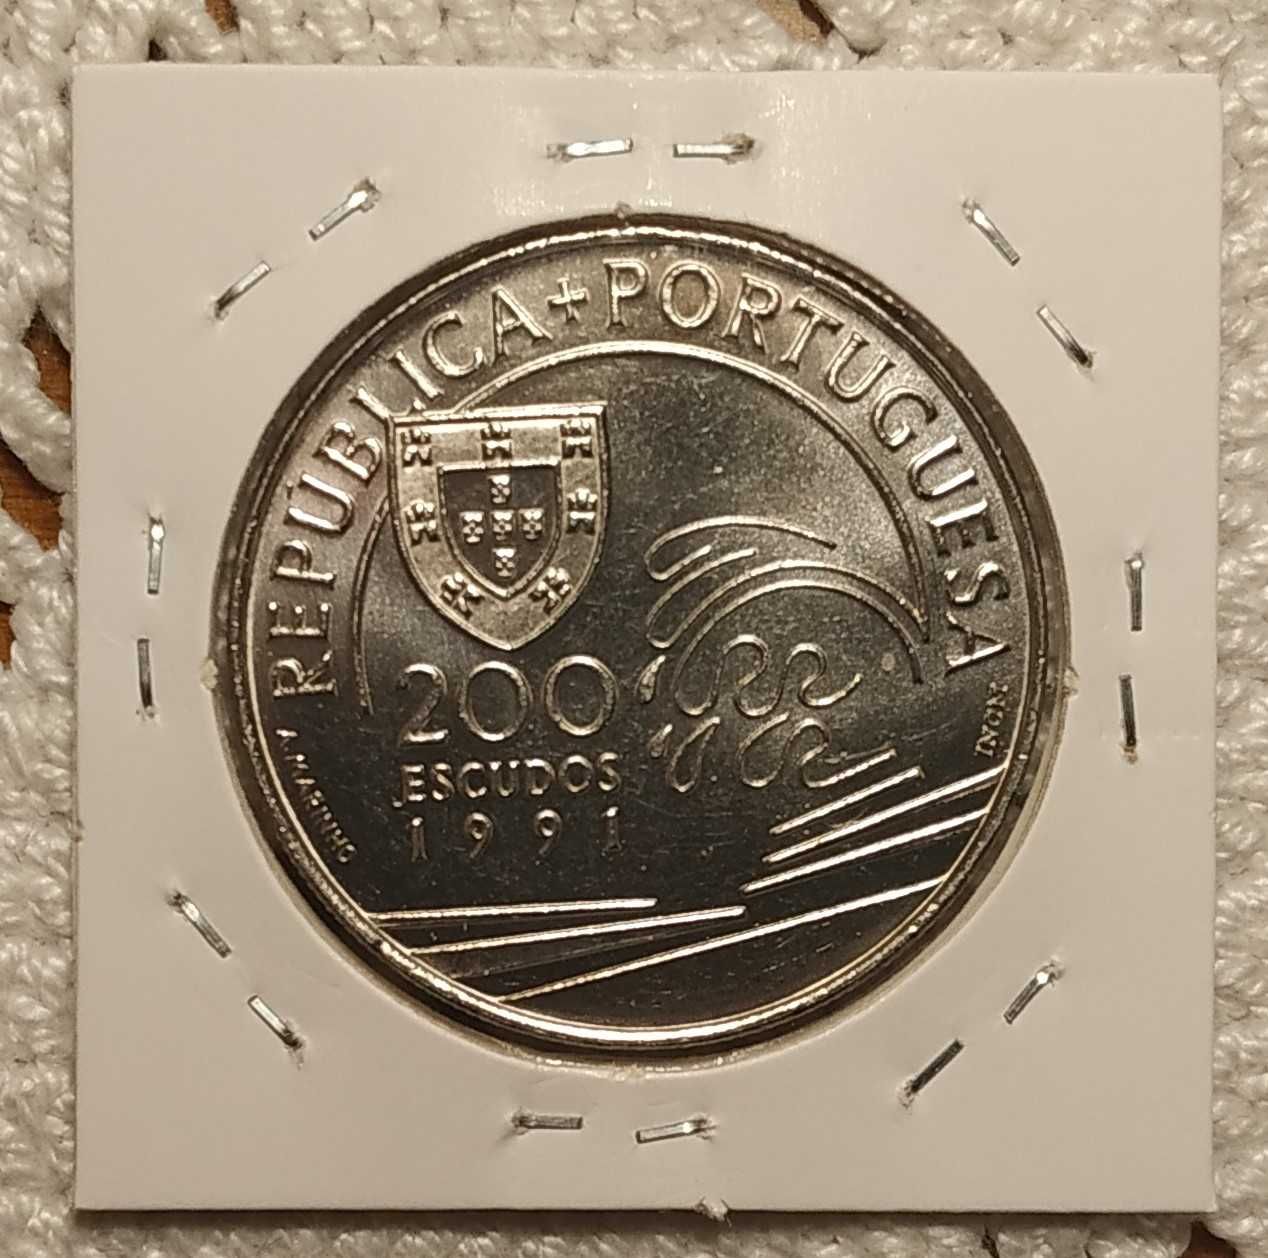 Portugal - moeda de 200 escudos de 1991 Colombo (1)